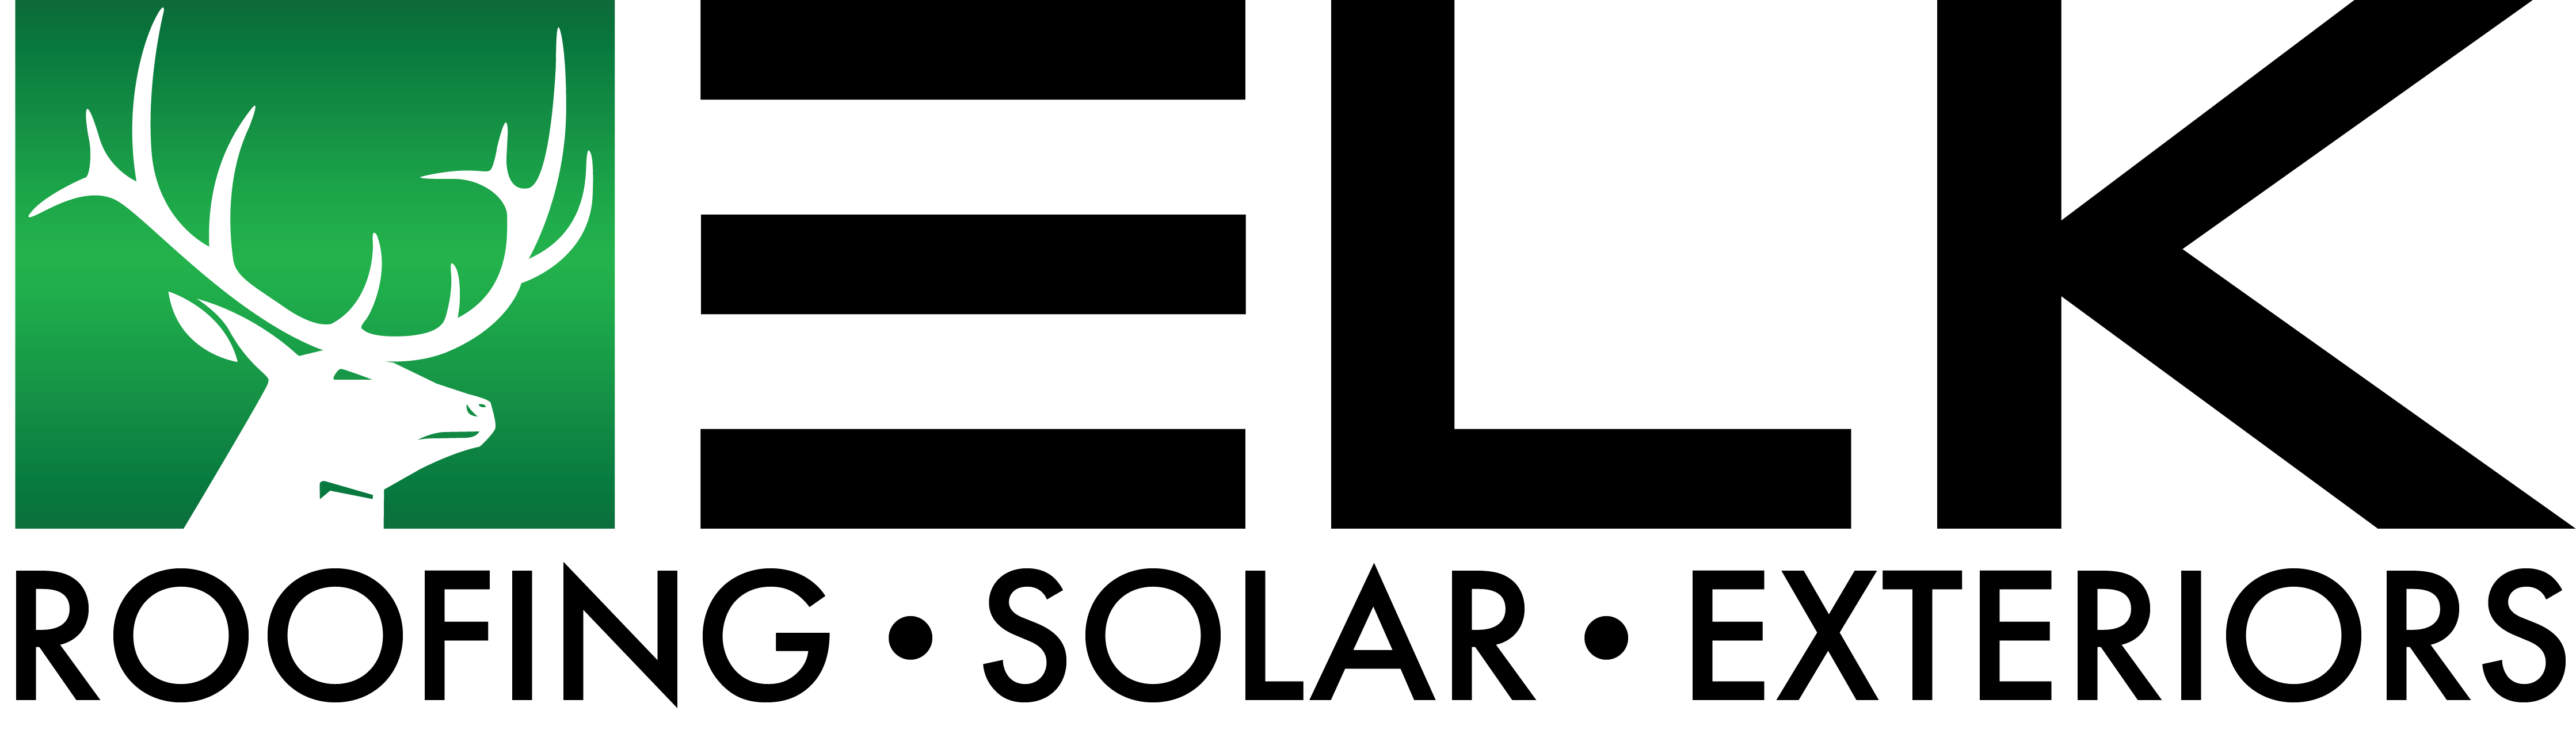 ELK Roofing, Solar, Exteriors - Denver roofing contractors